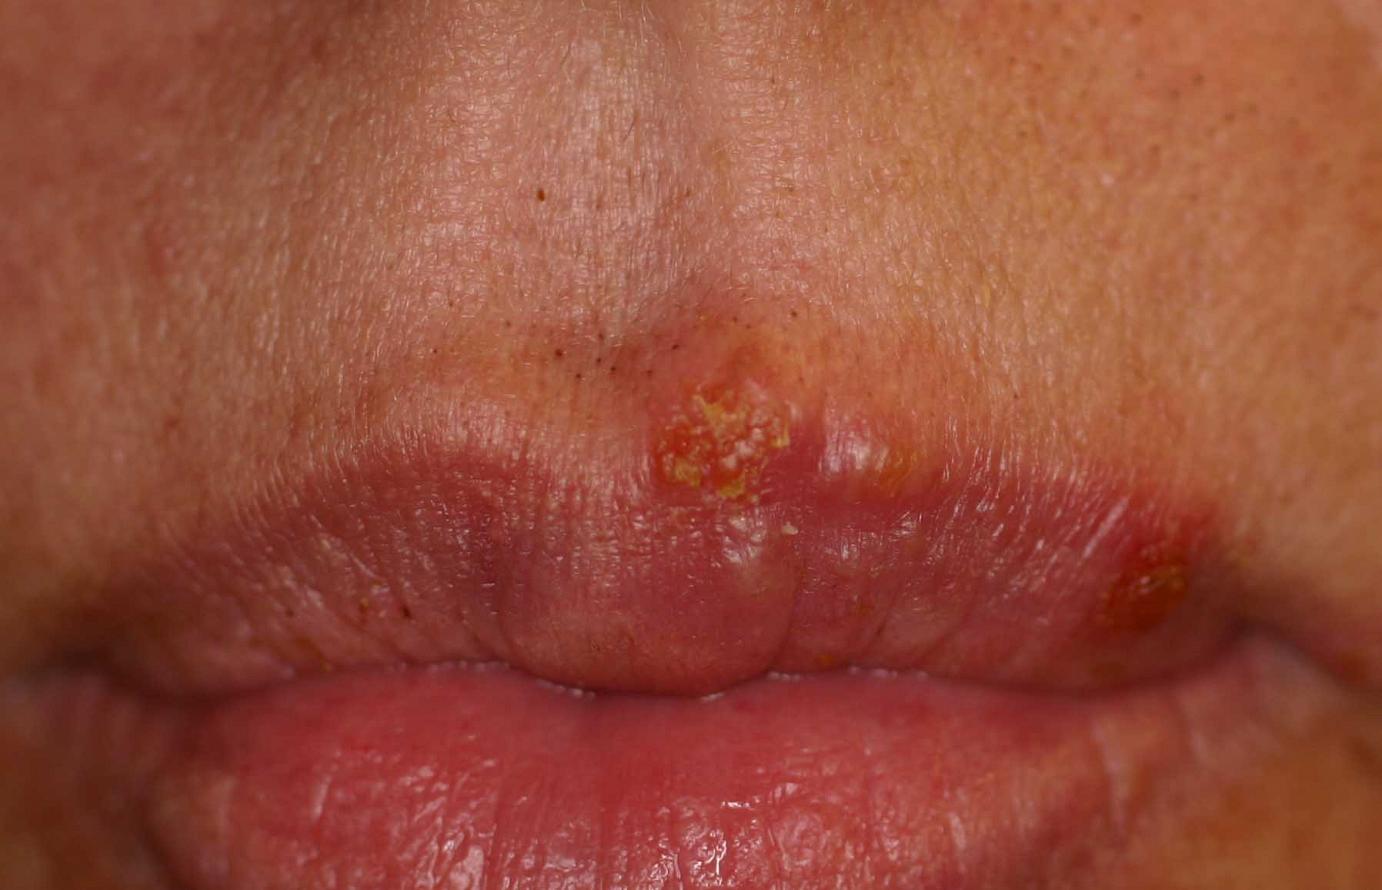 Oral Herpes In Children Pictures : Genital Herpes Warts